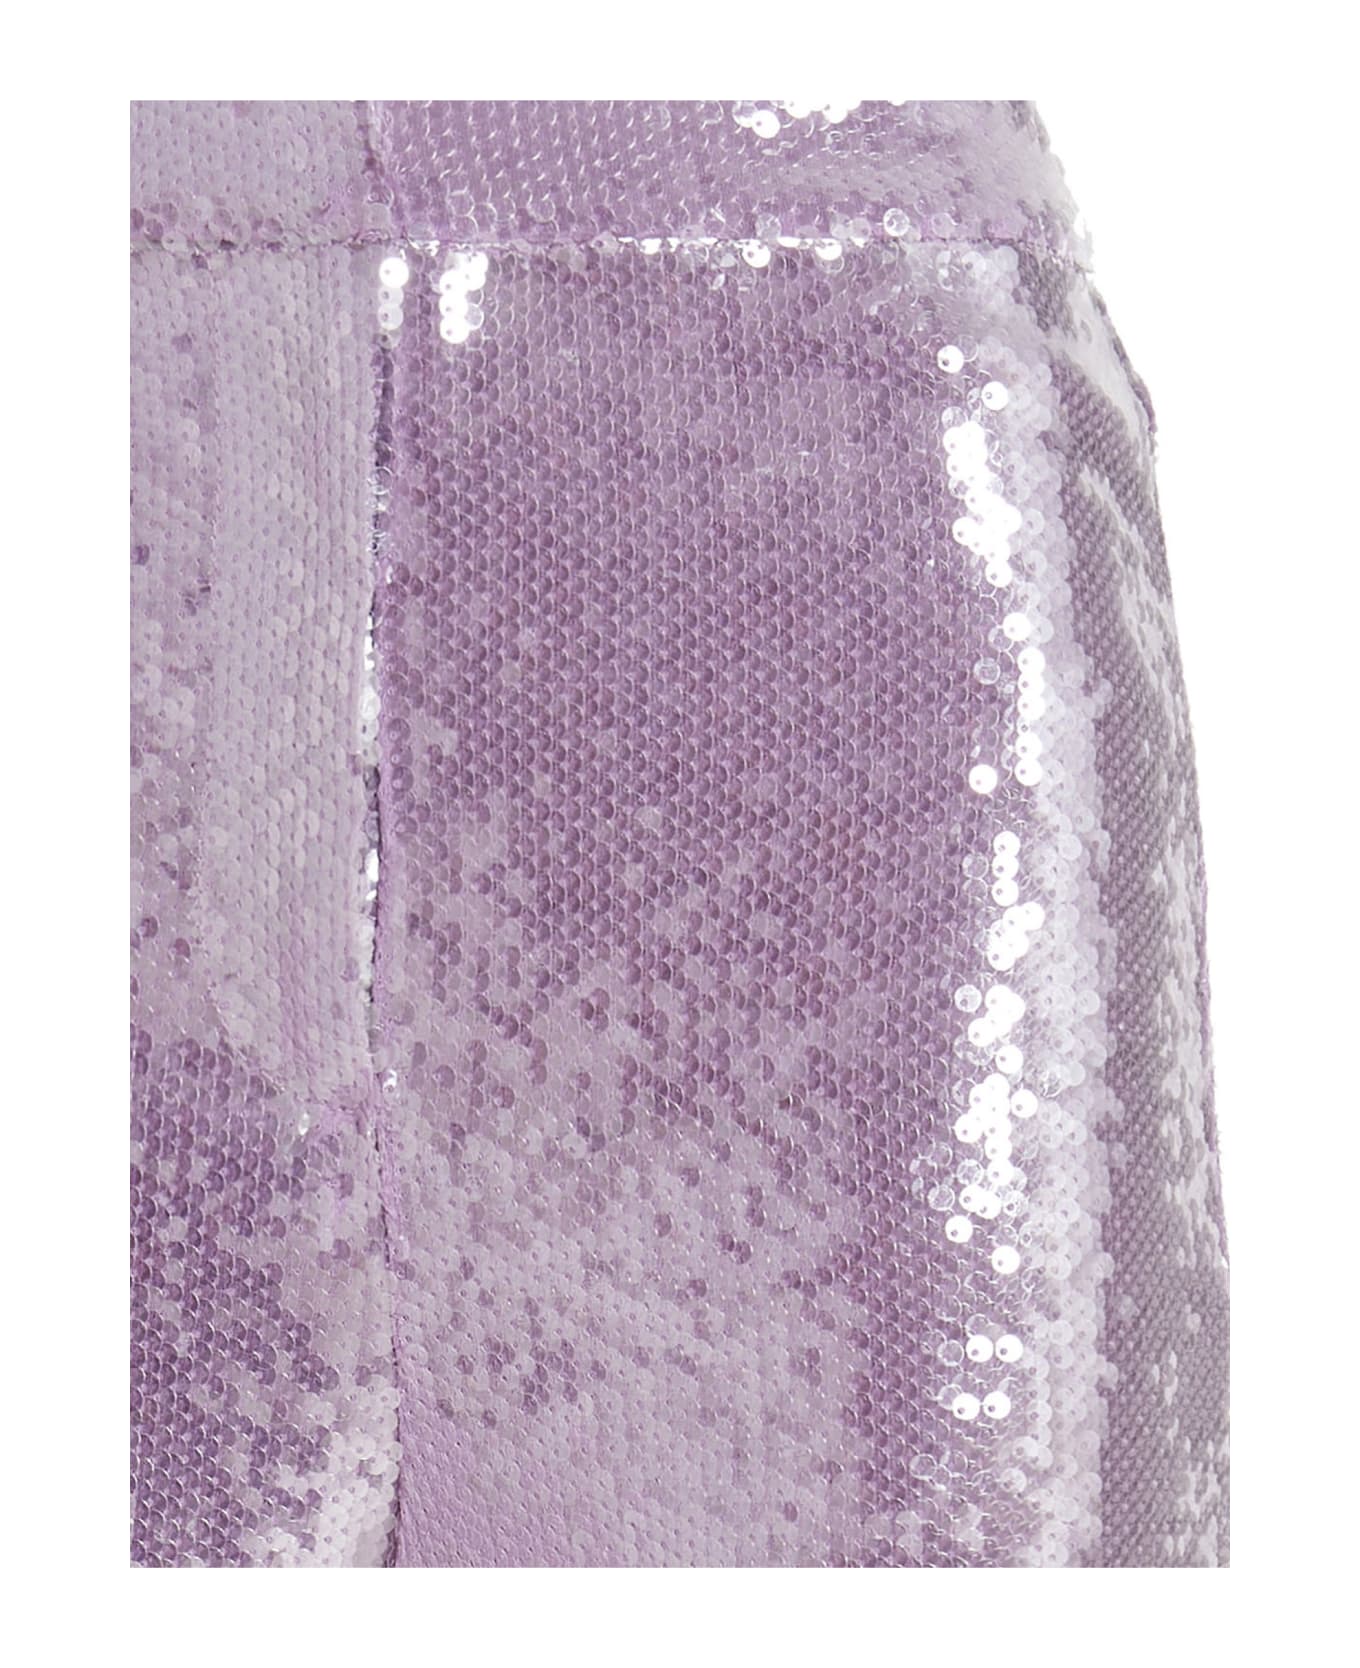 Rotate by Birger Christensen Sequin Pants - Purple